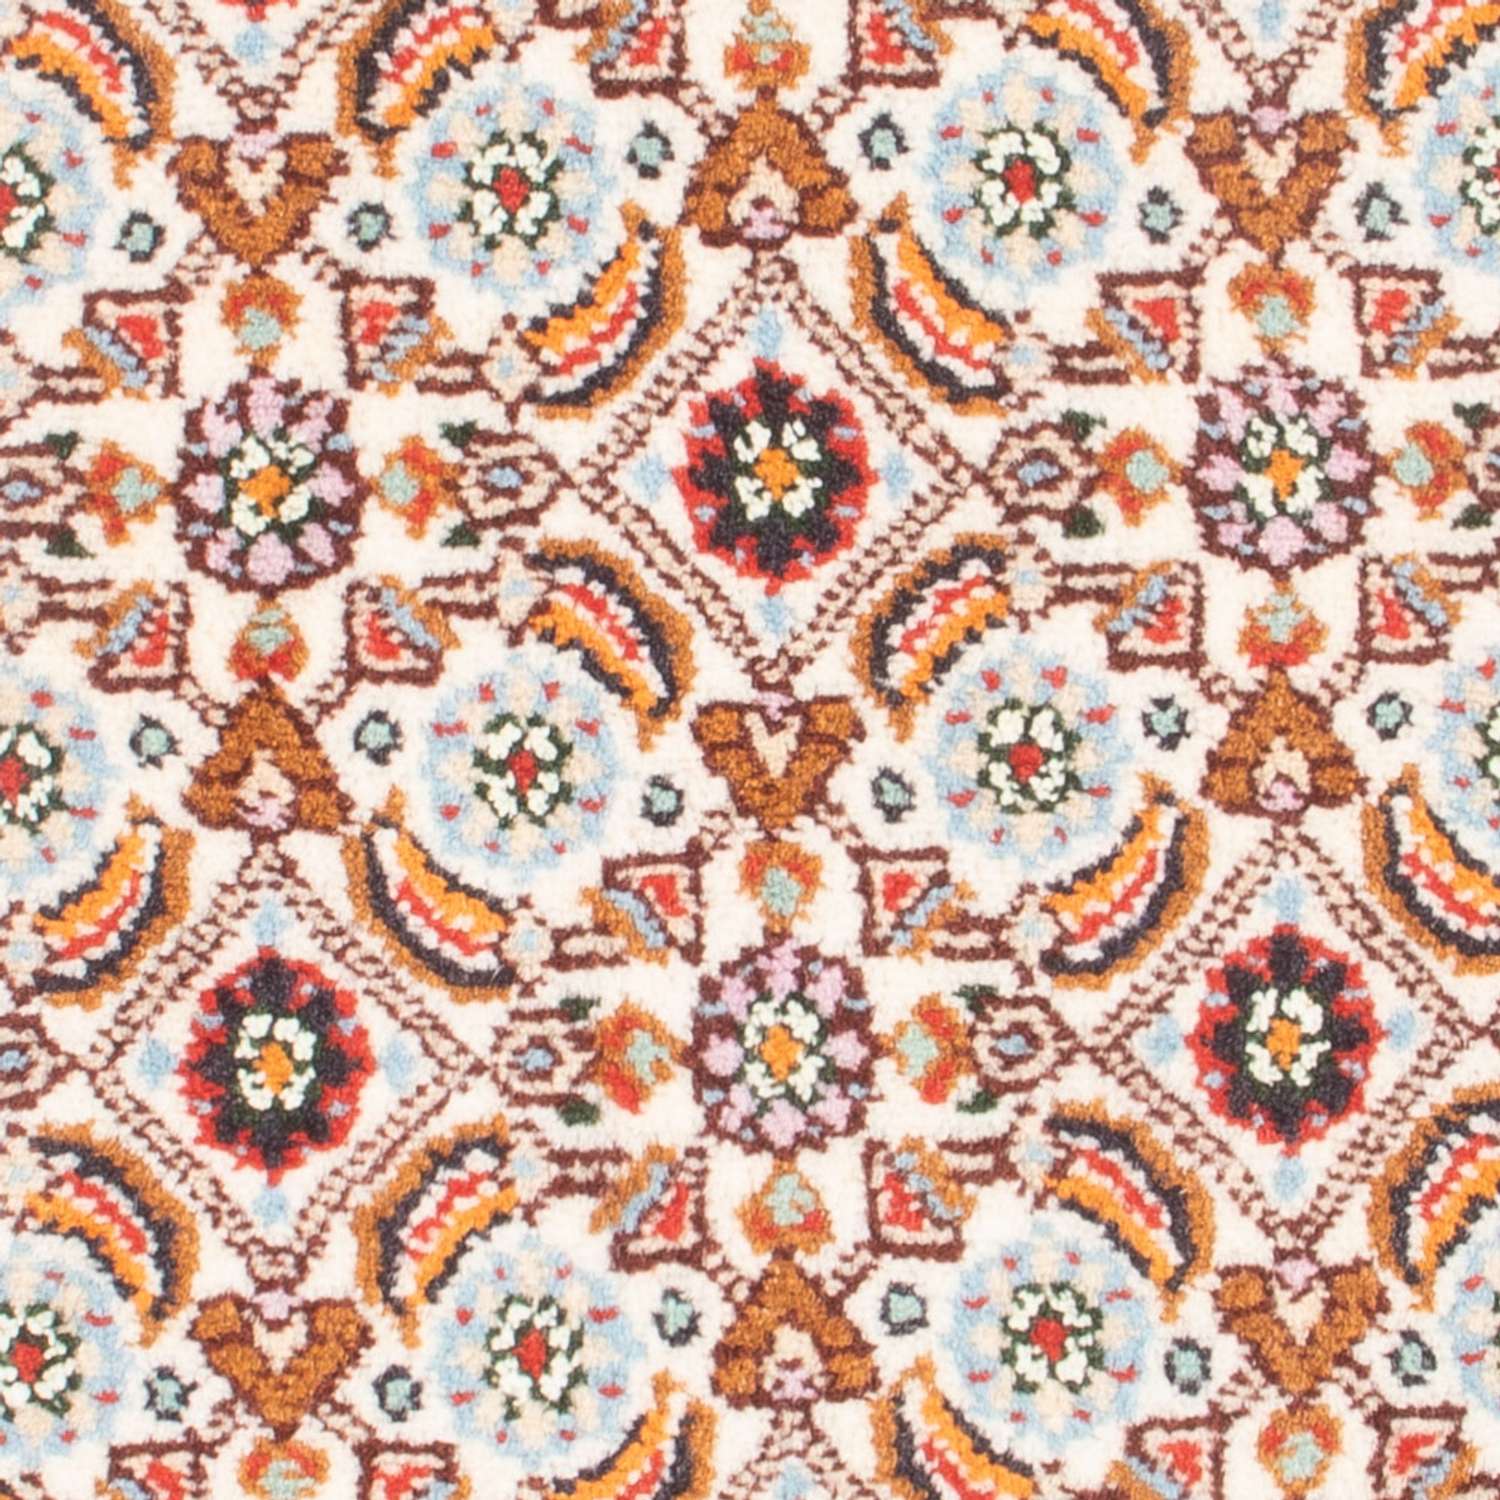 Alfombra persa - Clásica - Real - 90 x 60 cm - multicolor